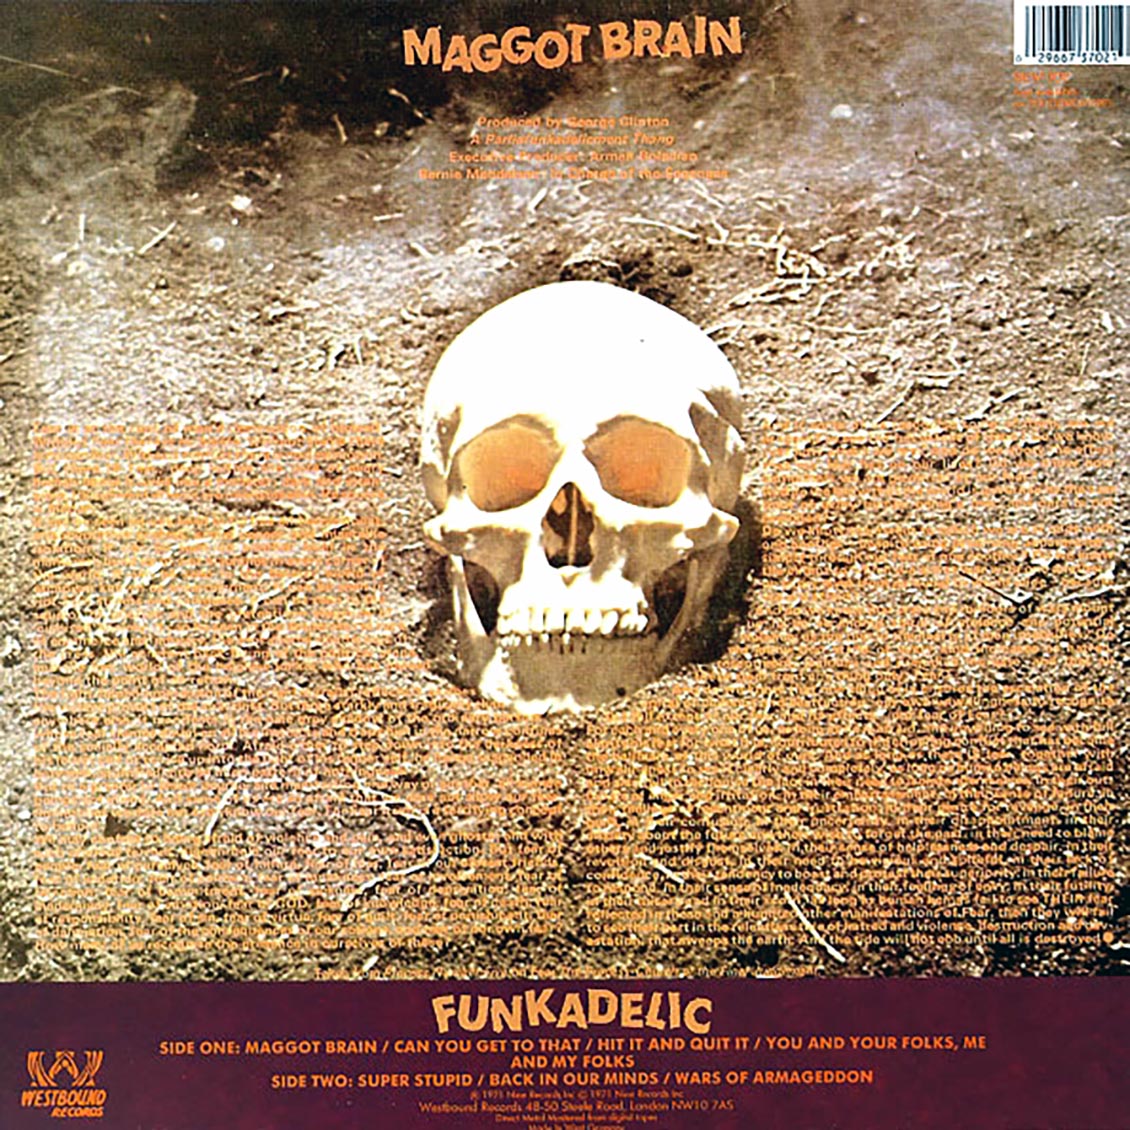 Funkadelic - Maggot Brain - Vinyl LP, LP